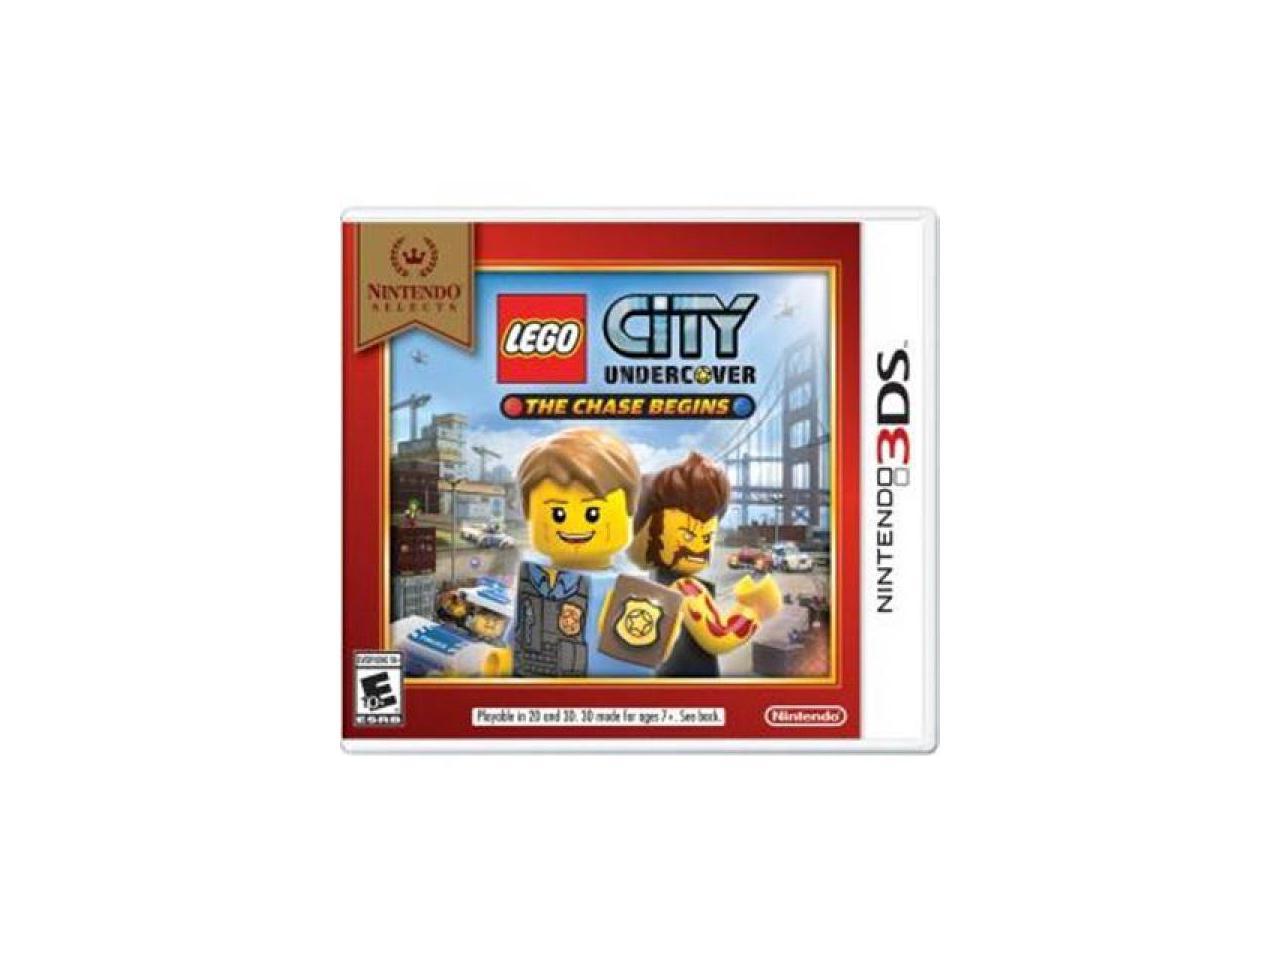 antydning Tilintetgøre Uberettiget LEGO City Undercover: The Chase Begins - Nintendo 3DS - Newegg.com